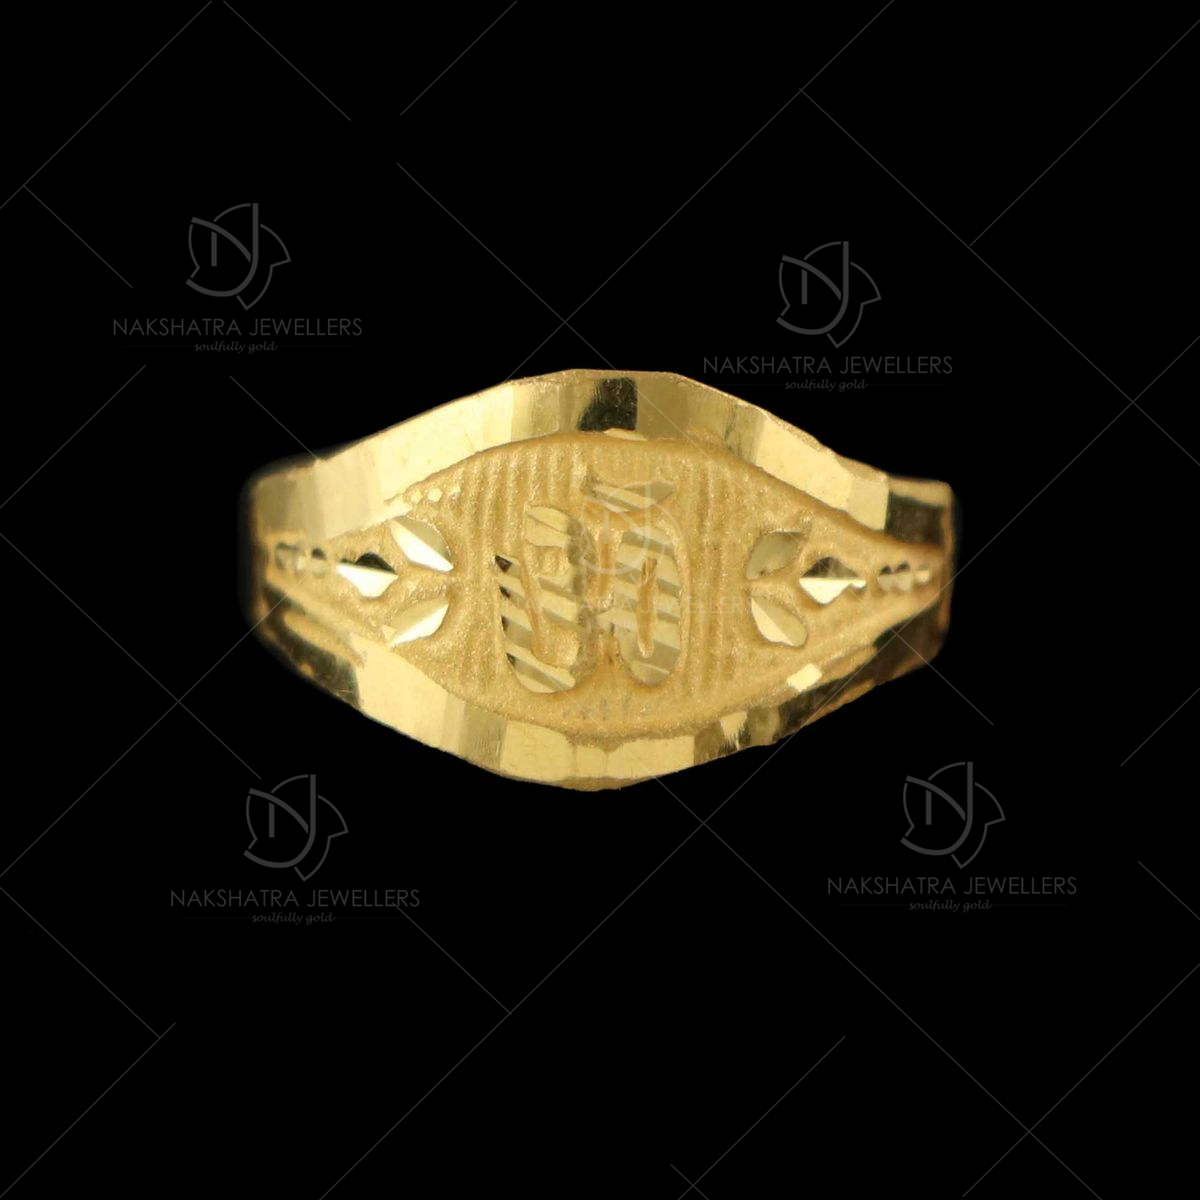 Buy Malabar Gold 22 KT Gold Cocktail Ring for Kids Online